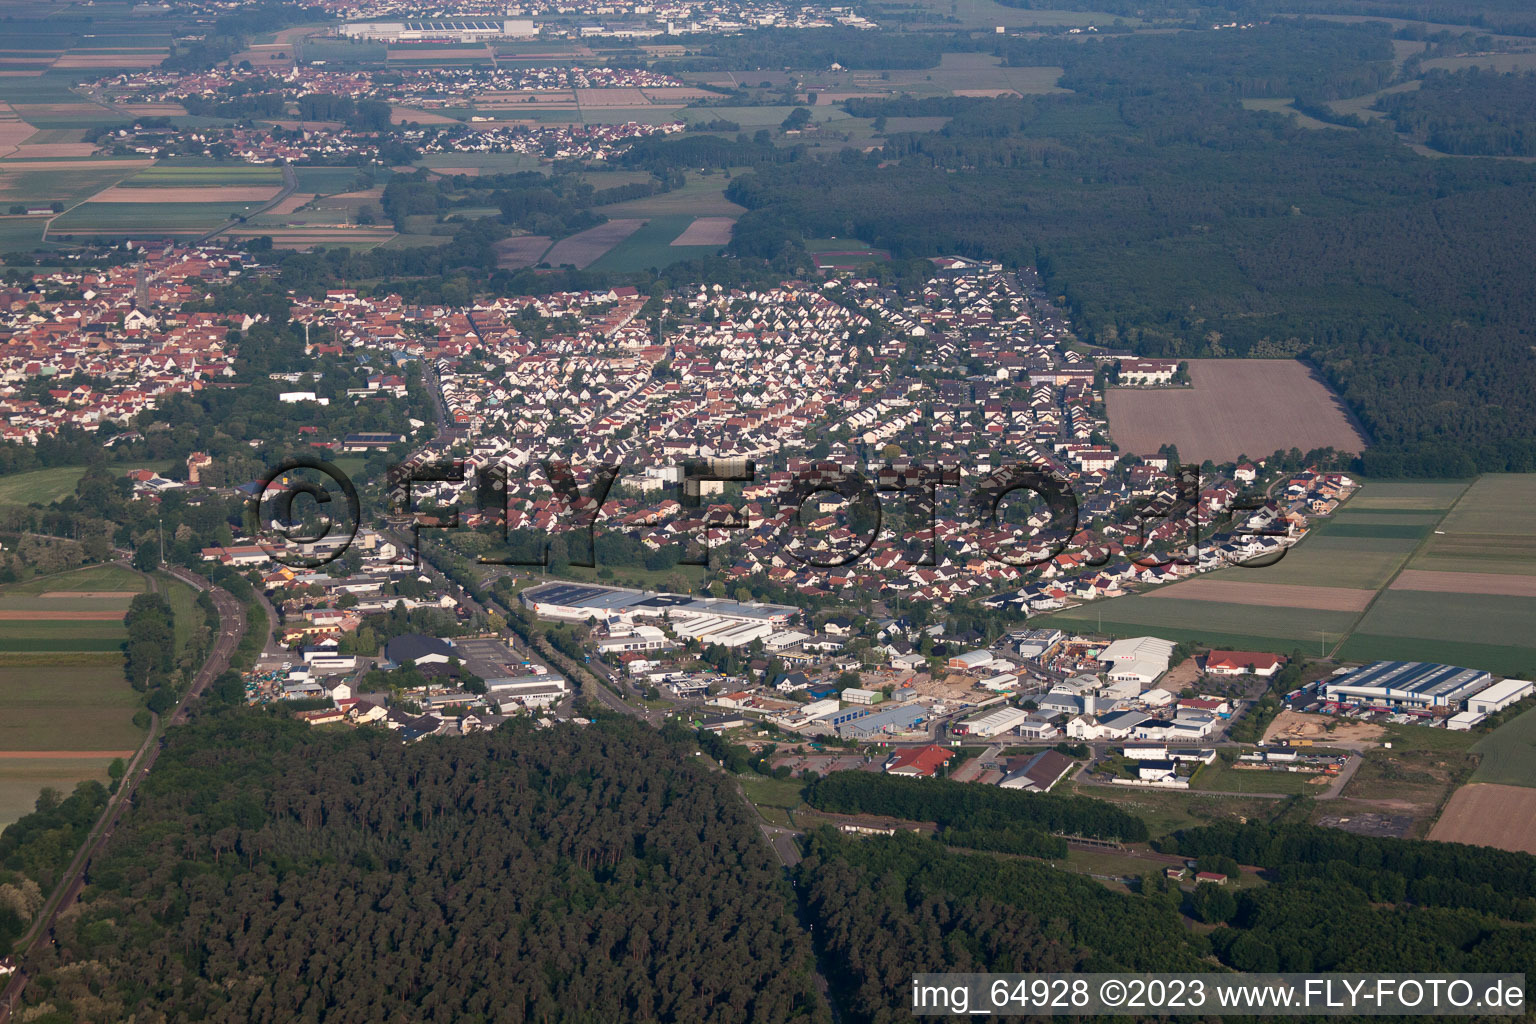 Bird's eye view of Bellheim in the state Rhineland-Palatinate, Germany